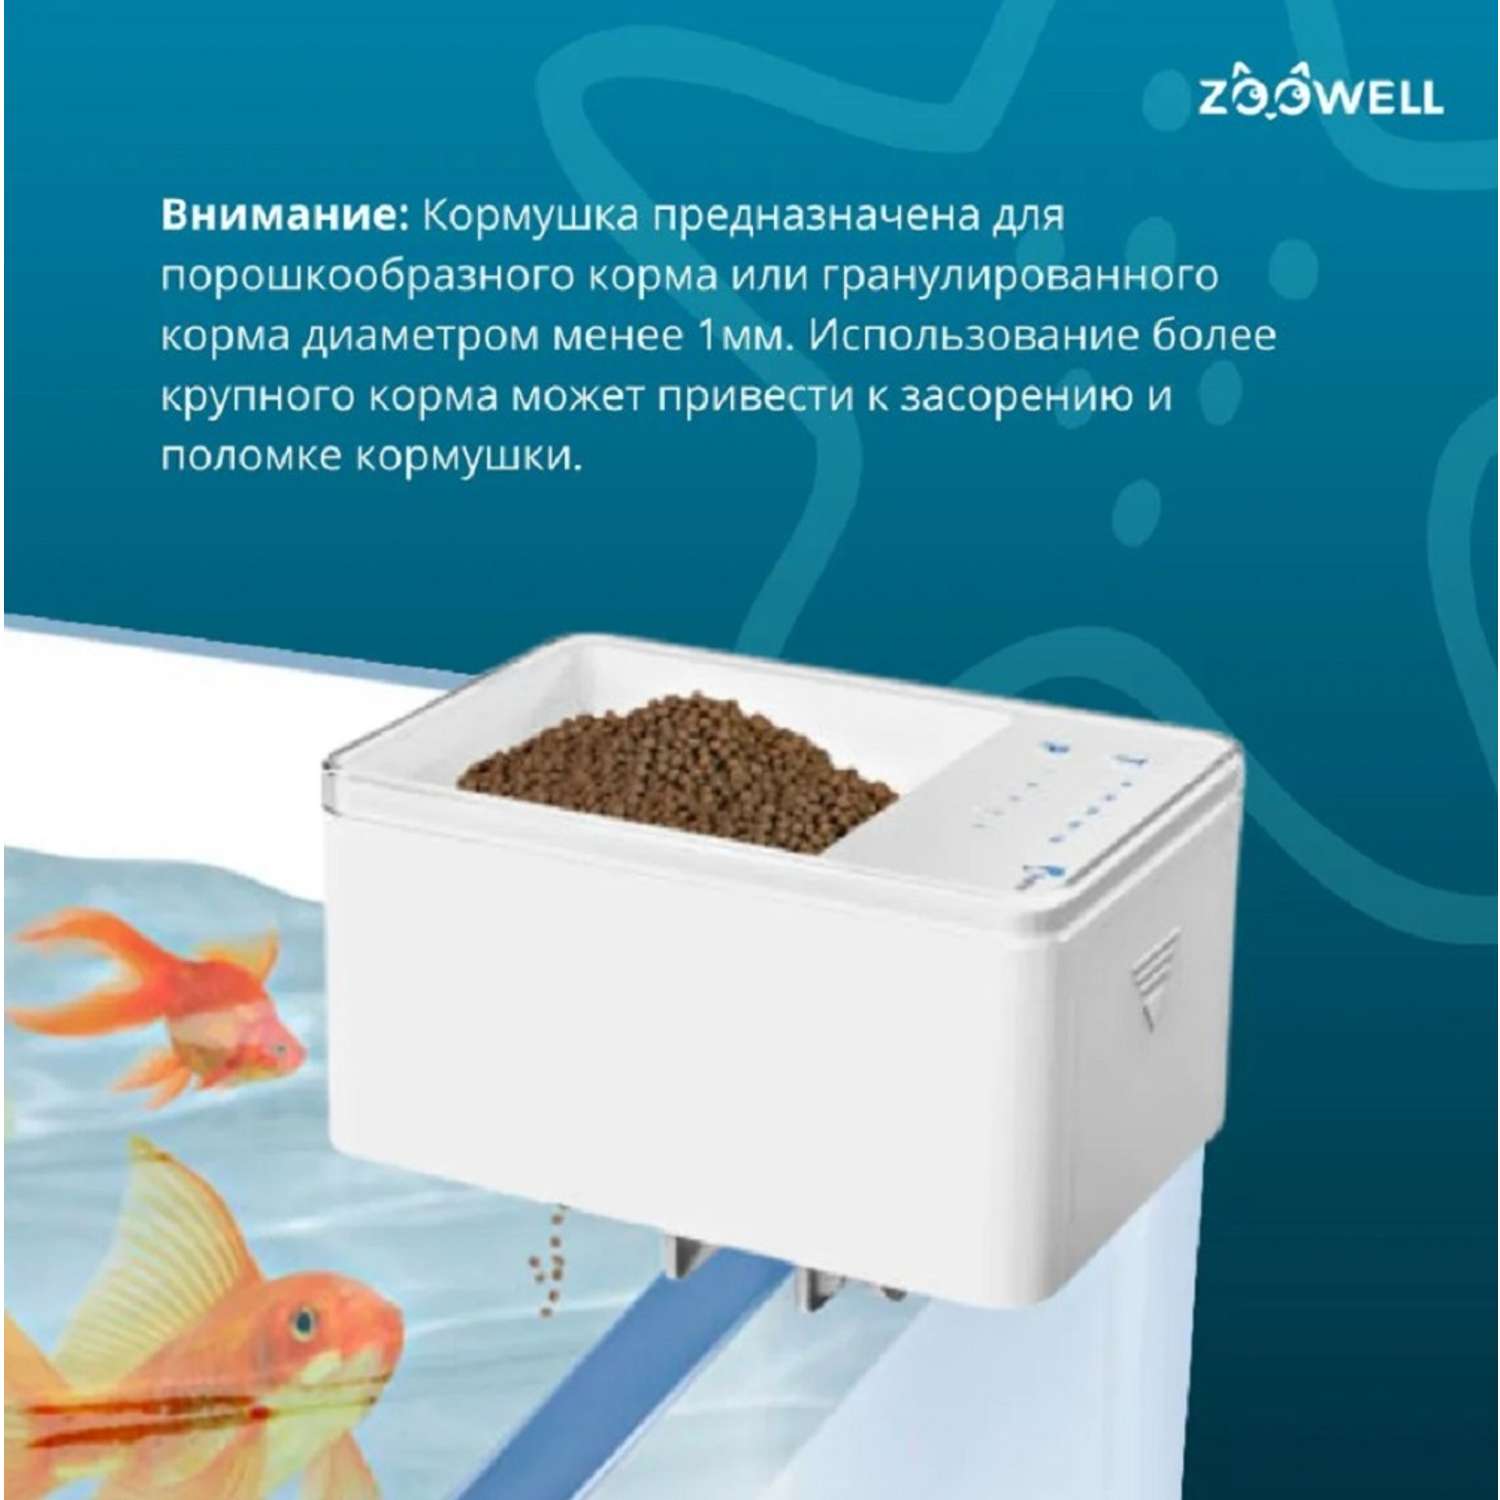 Кормушка ZDK для рыб в аквариум автоматическая белая ZooWell - фото 6